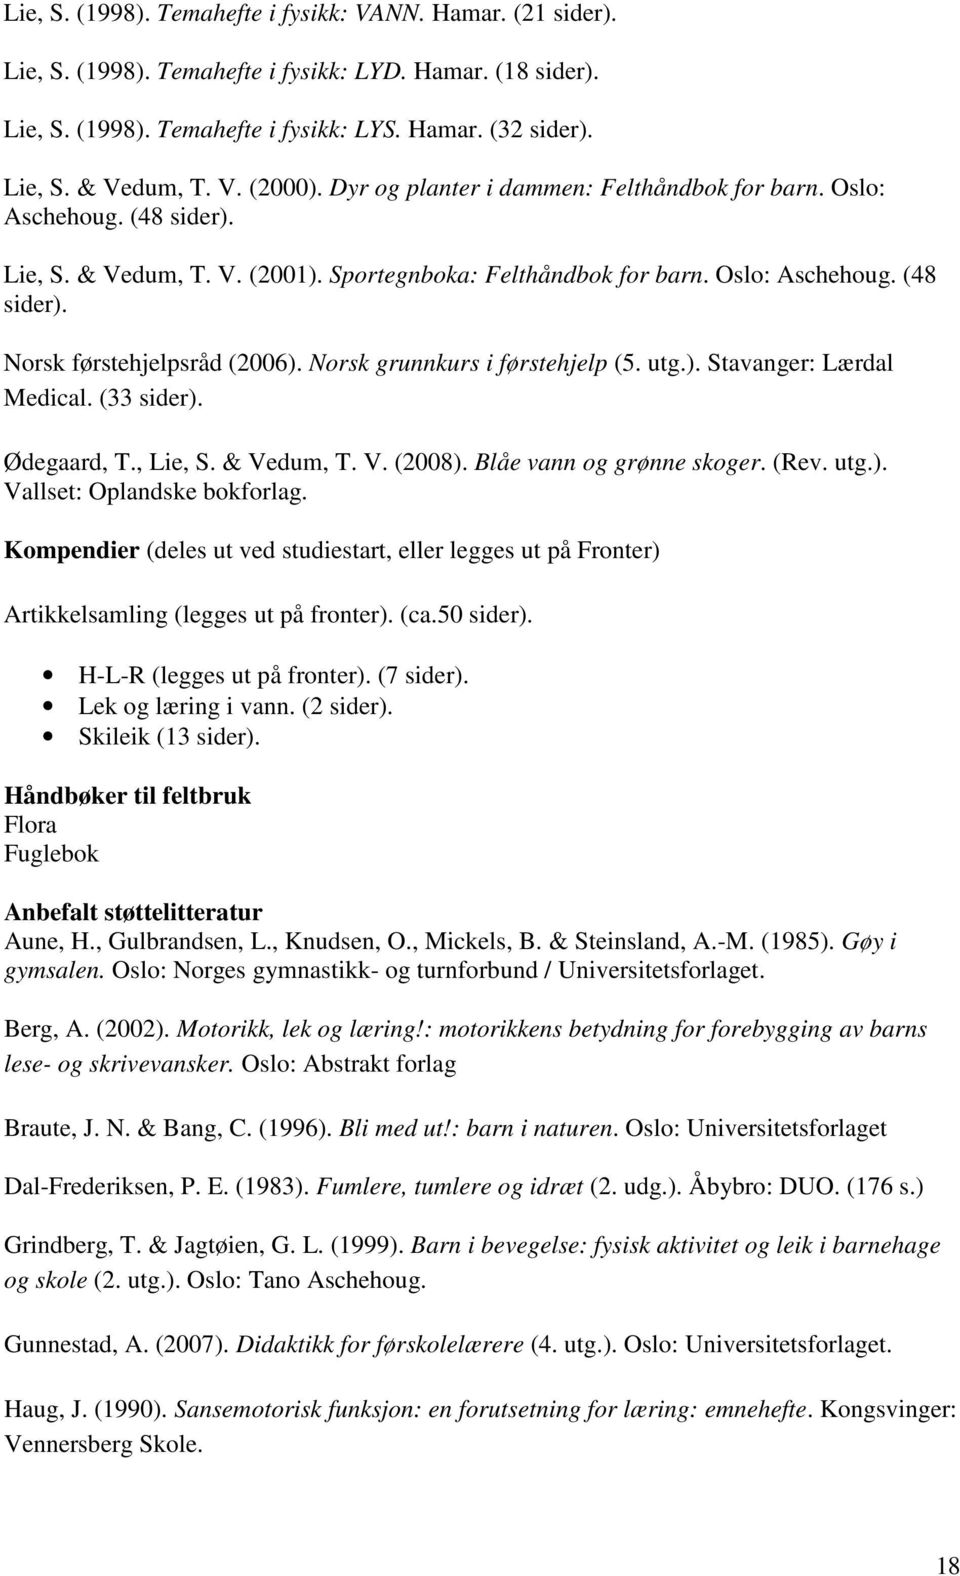 Norsk grunnkurs i førstehjelp (5. utg.). Stavanger: Lærdal Medical. (33 sider). Ødegaard, T., Lie, S. & Vedum, T. V. (2008). Blåe vann og grønne skoger. (Rev. utg.). Vallset: Oplandske bokforlag.